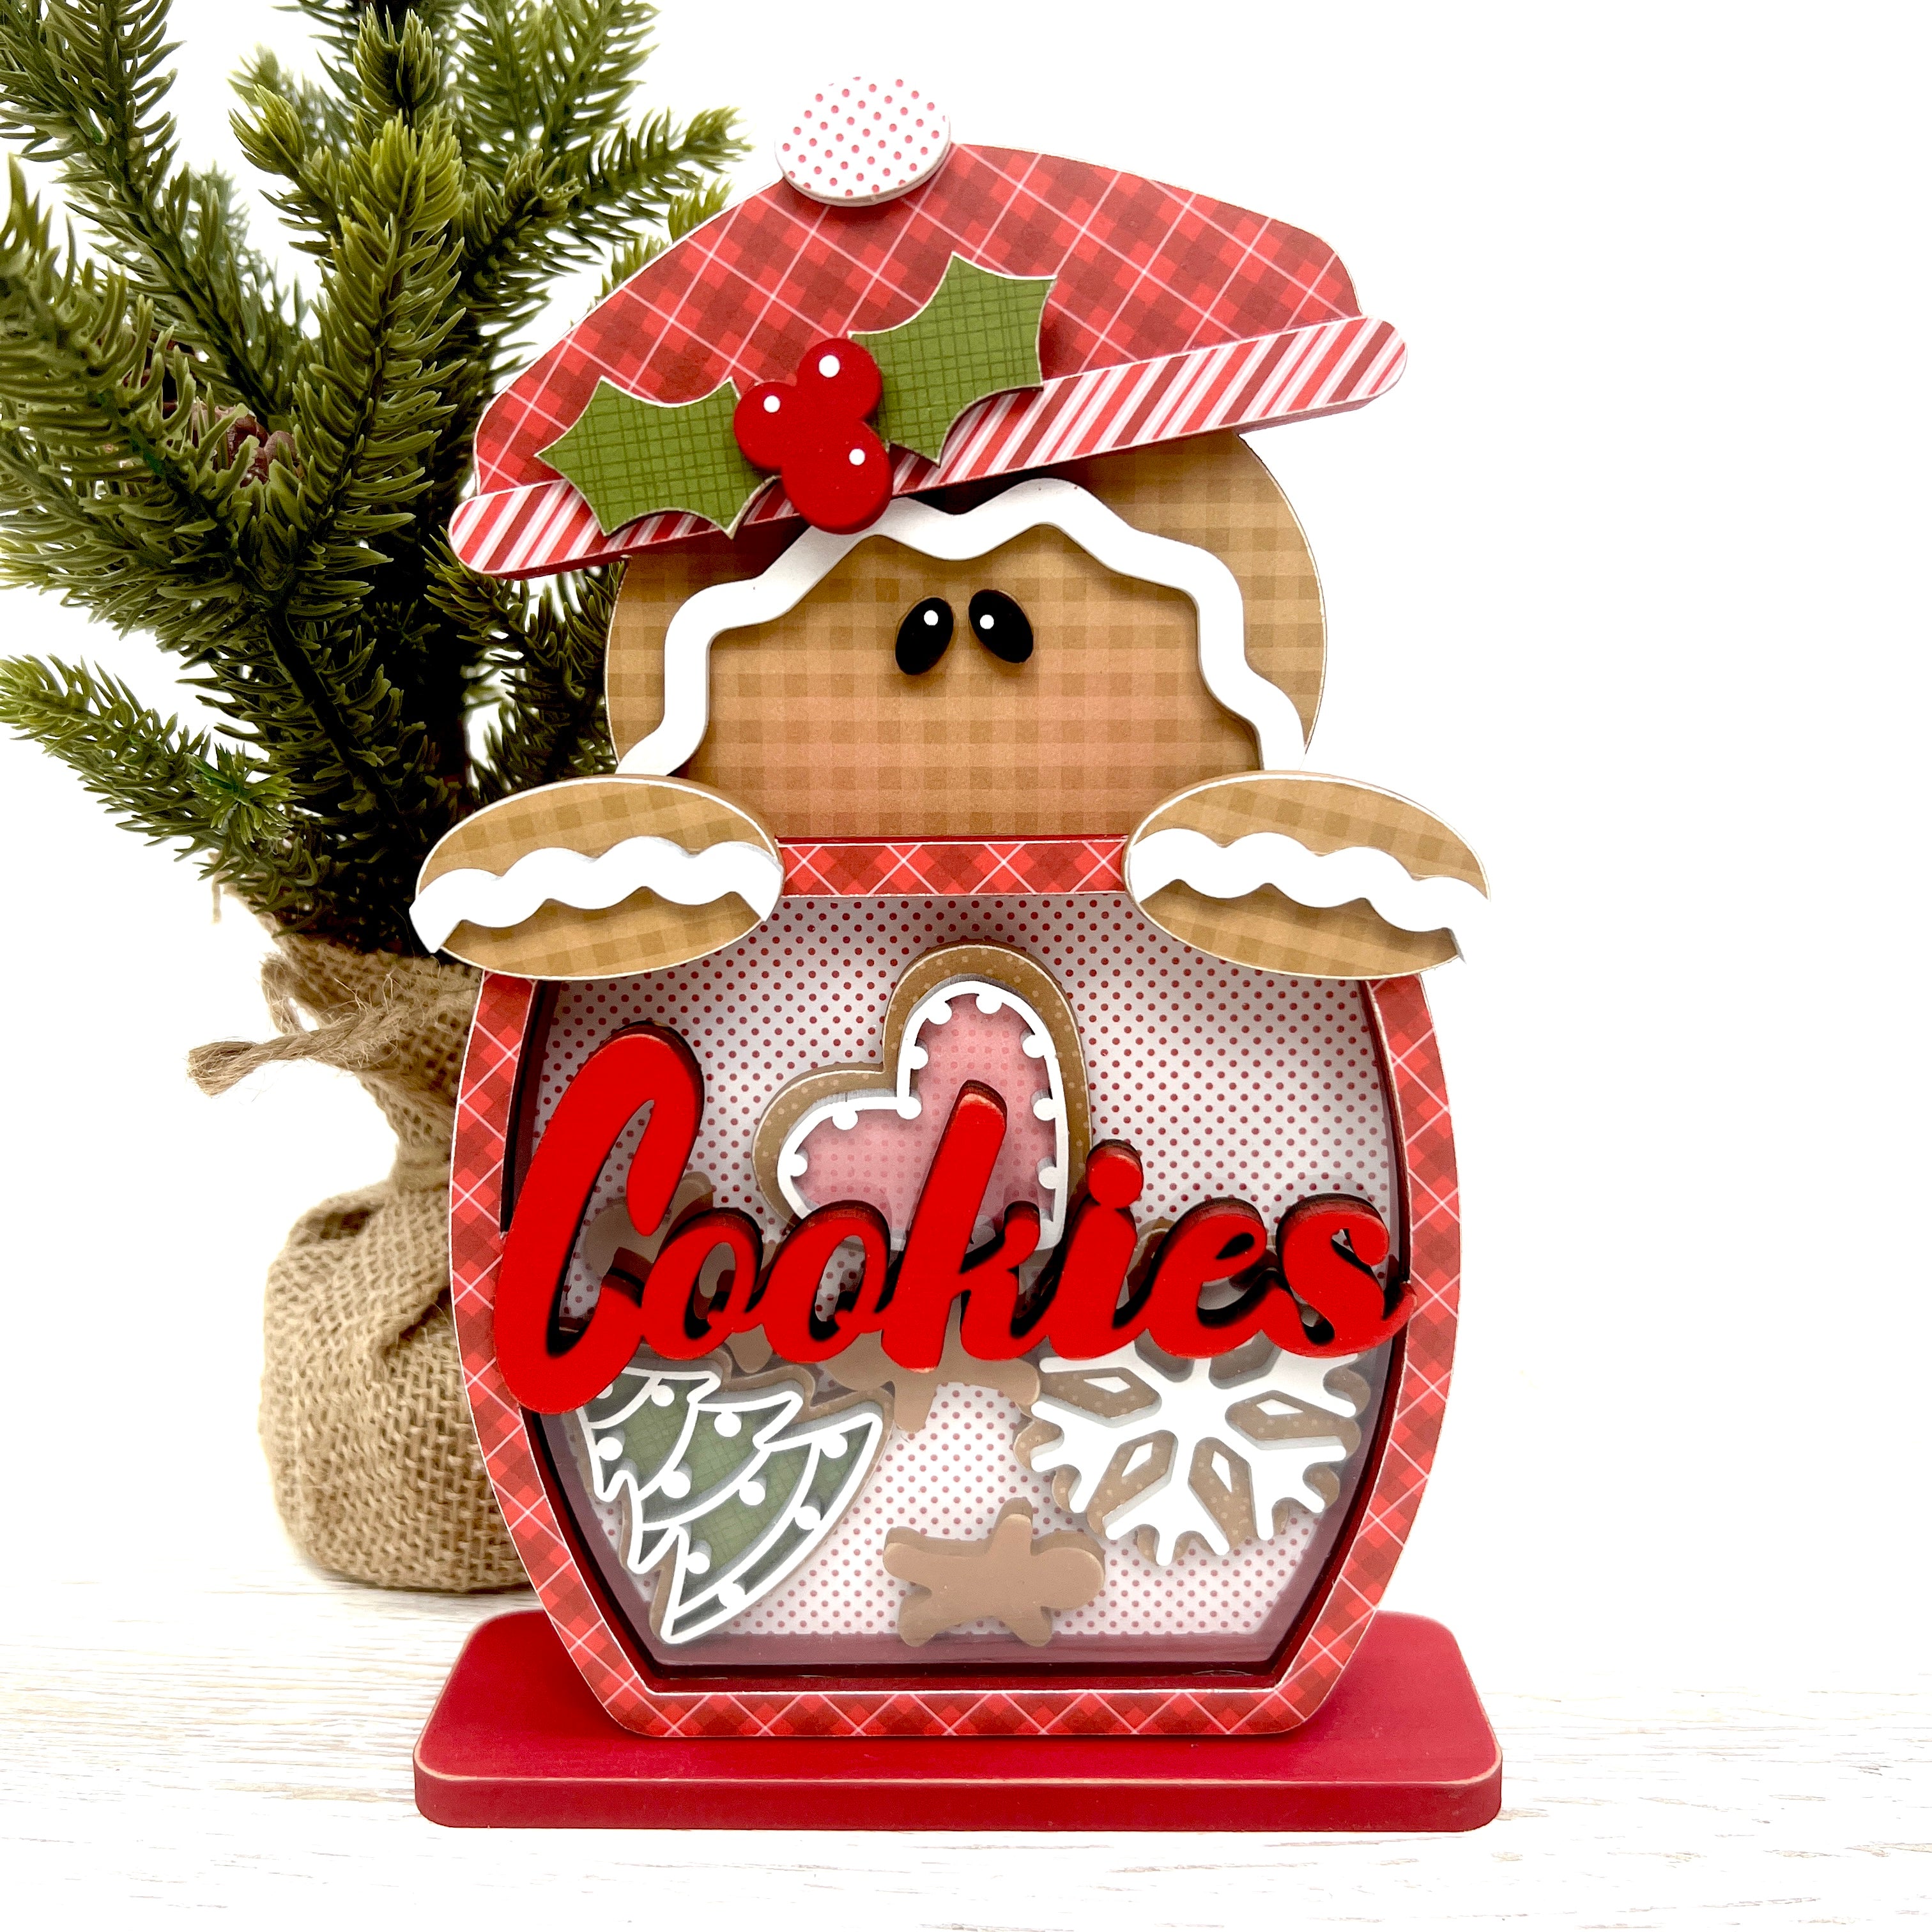 Gingerbread Shaker Cookie Jar Wood Decor - Paisleys and Polka Dots